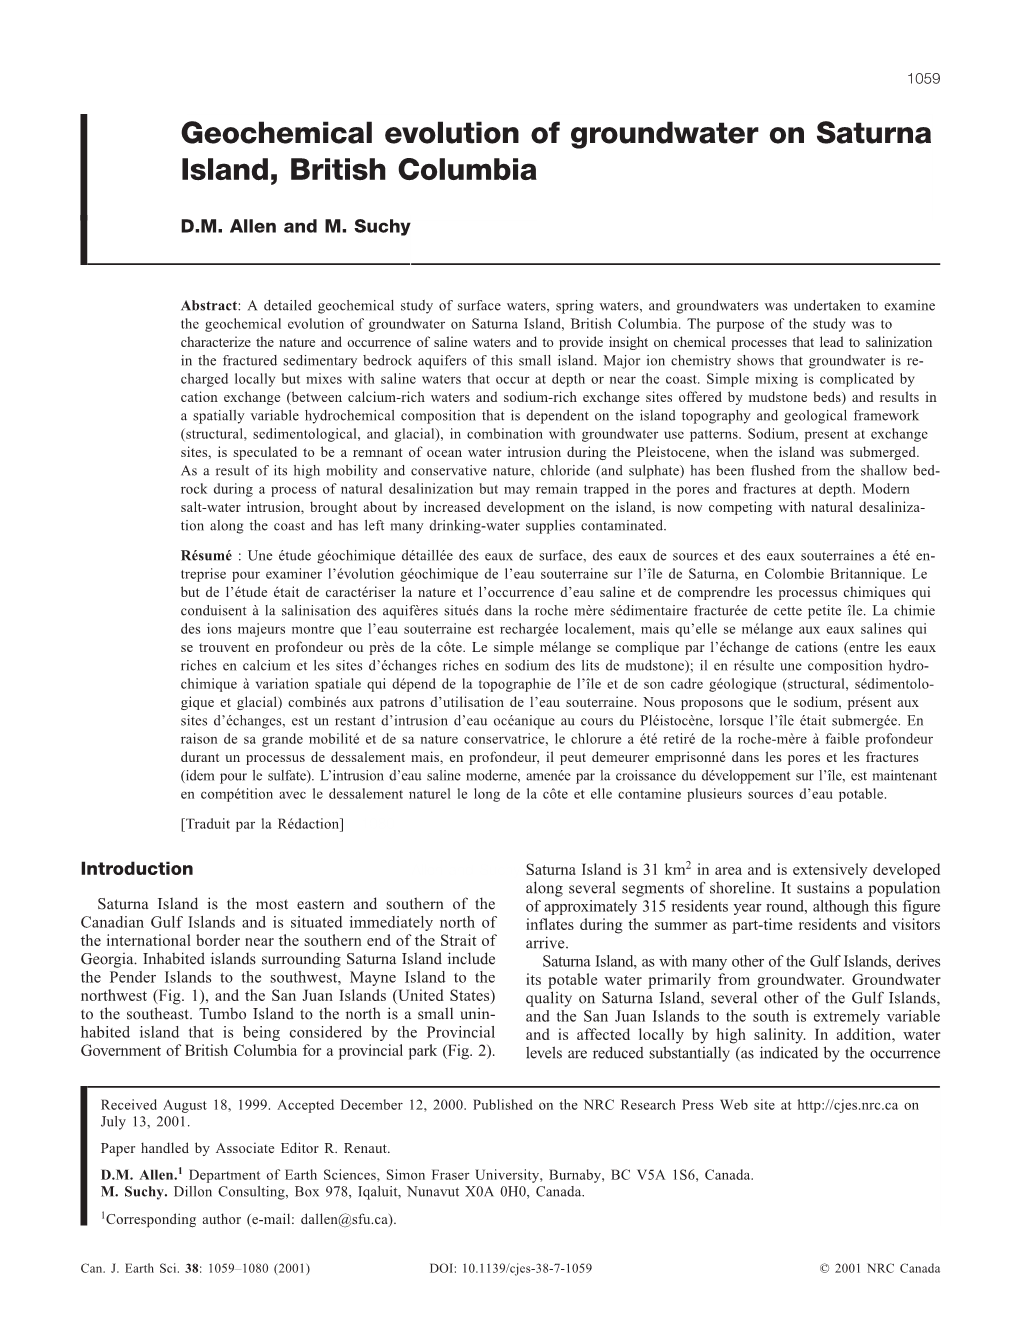 Geochemical Evolution of Groundwater on Saturna Island, British Columbia